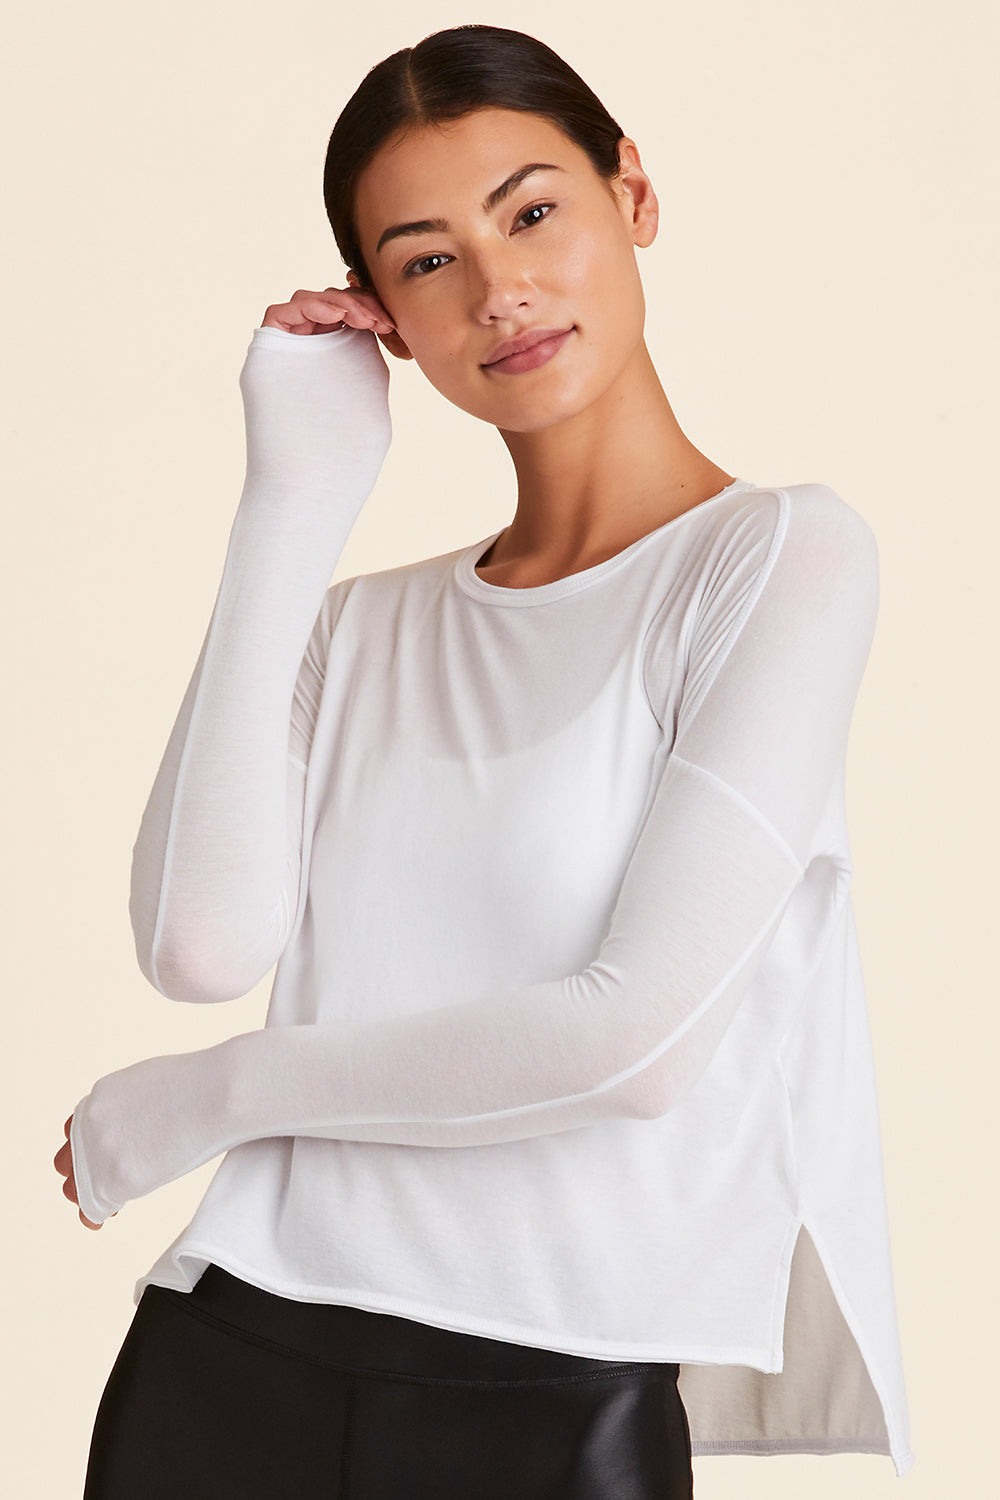 Lululemon Love Long-Sleeve Shirt - Black/Neutral - Size 14 Pima Cotton Fabric